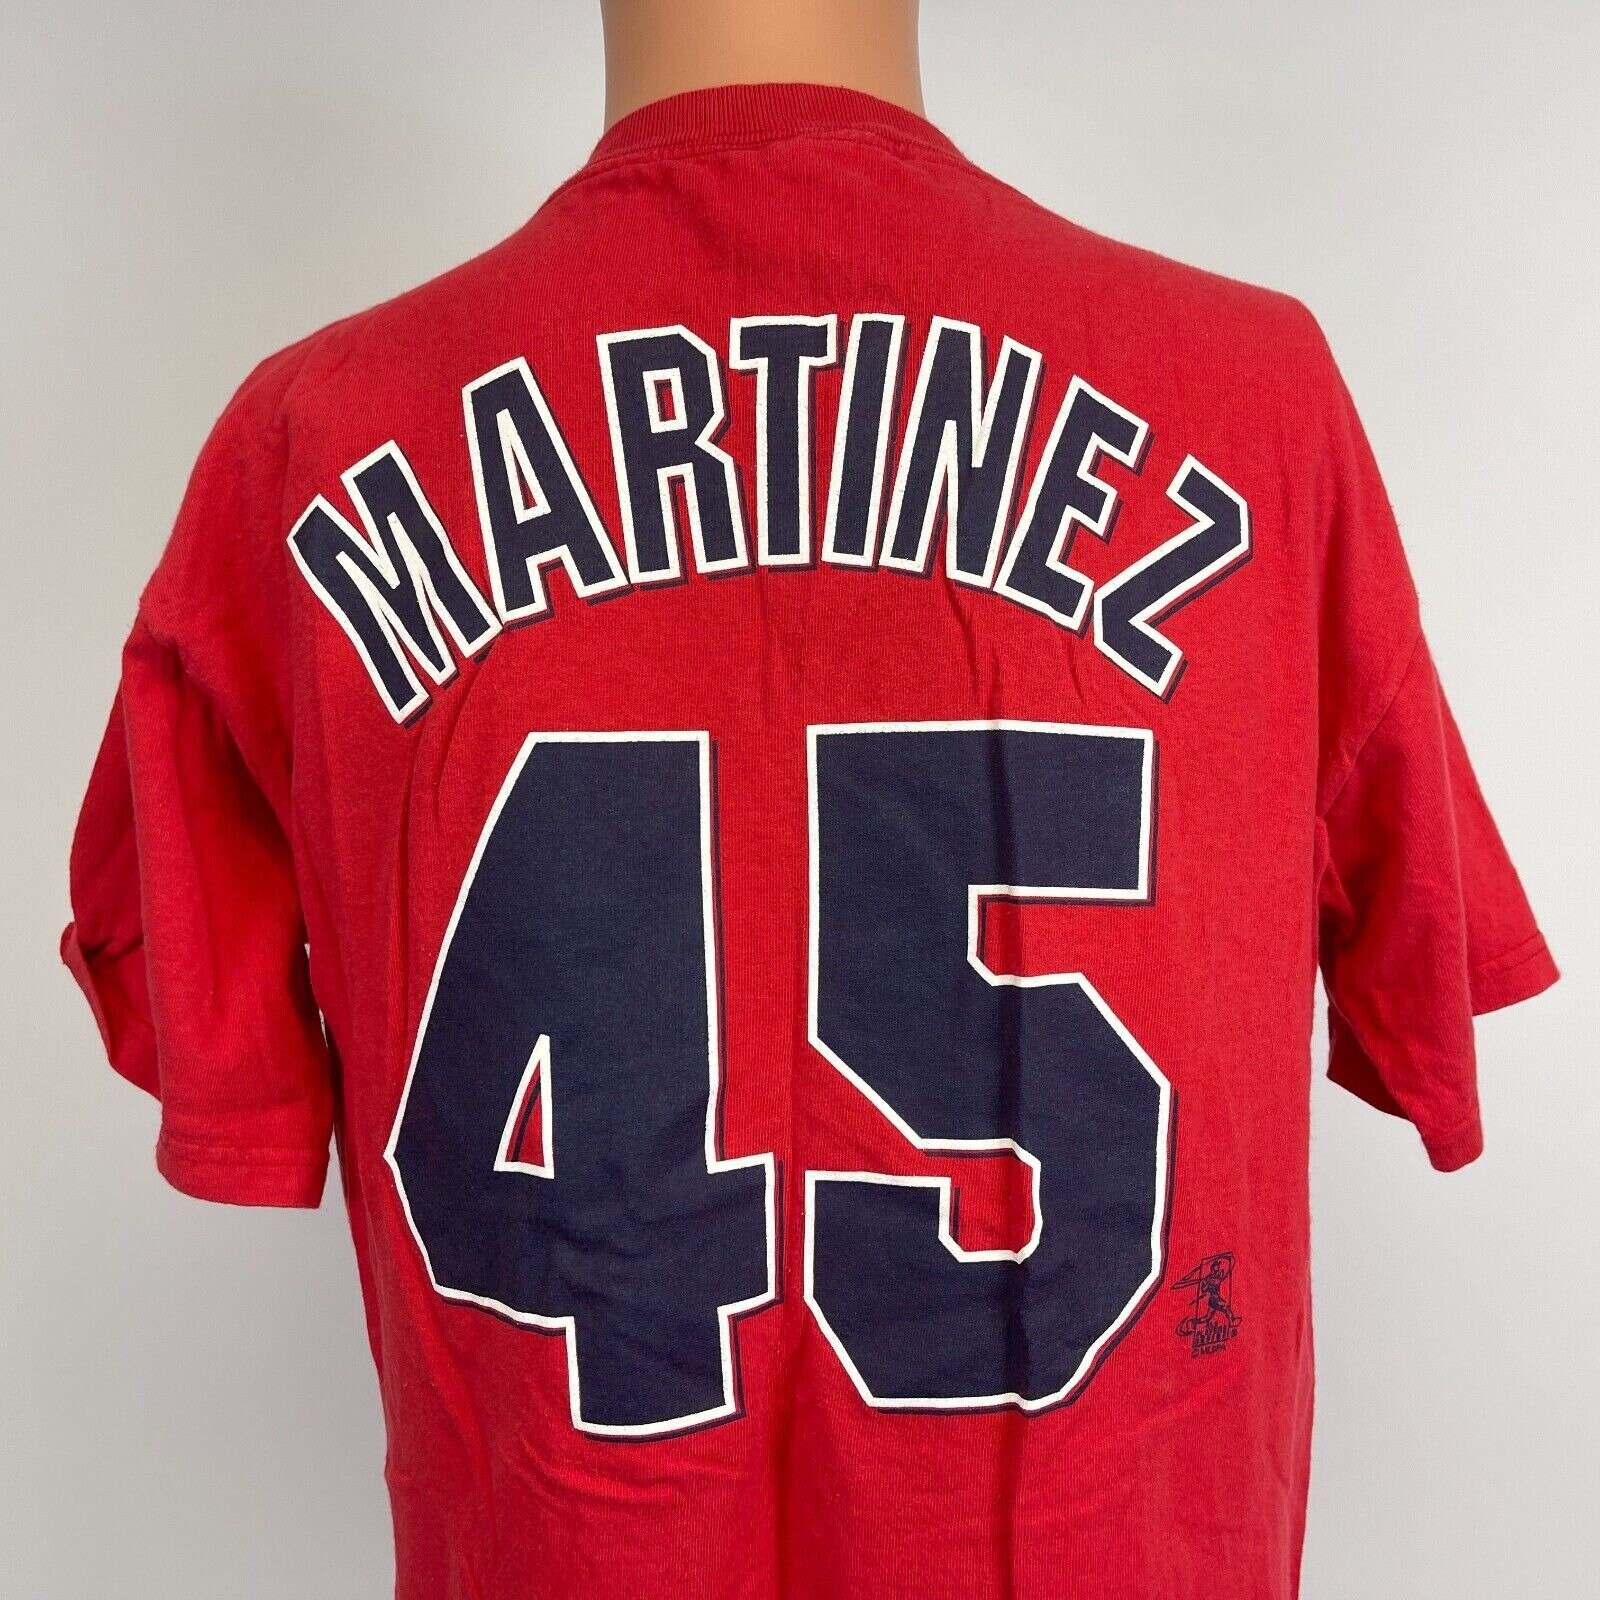 45 Pedro Martinez Custom Boston Red Sox baseball jersey Stitched logo bests  by dr authentic baseball jerseys cheap from china - AliExpress